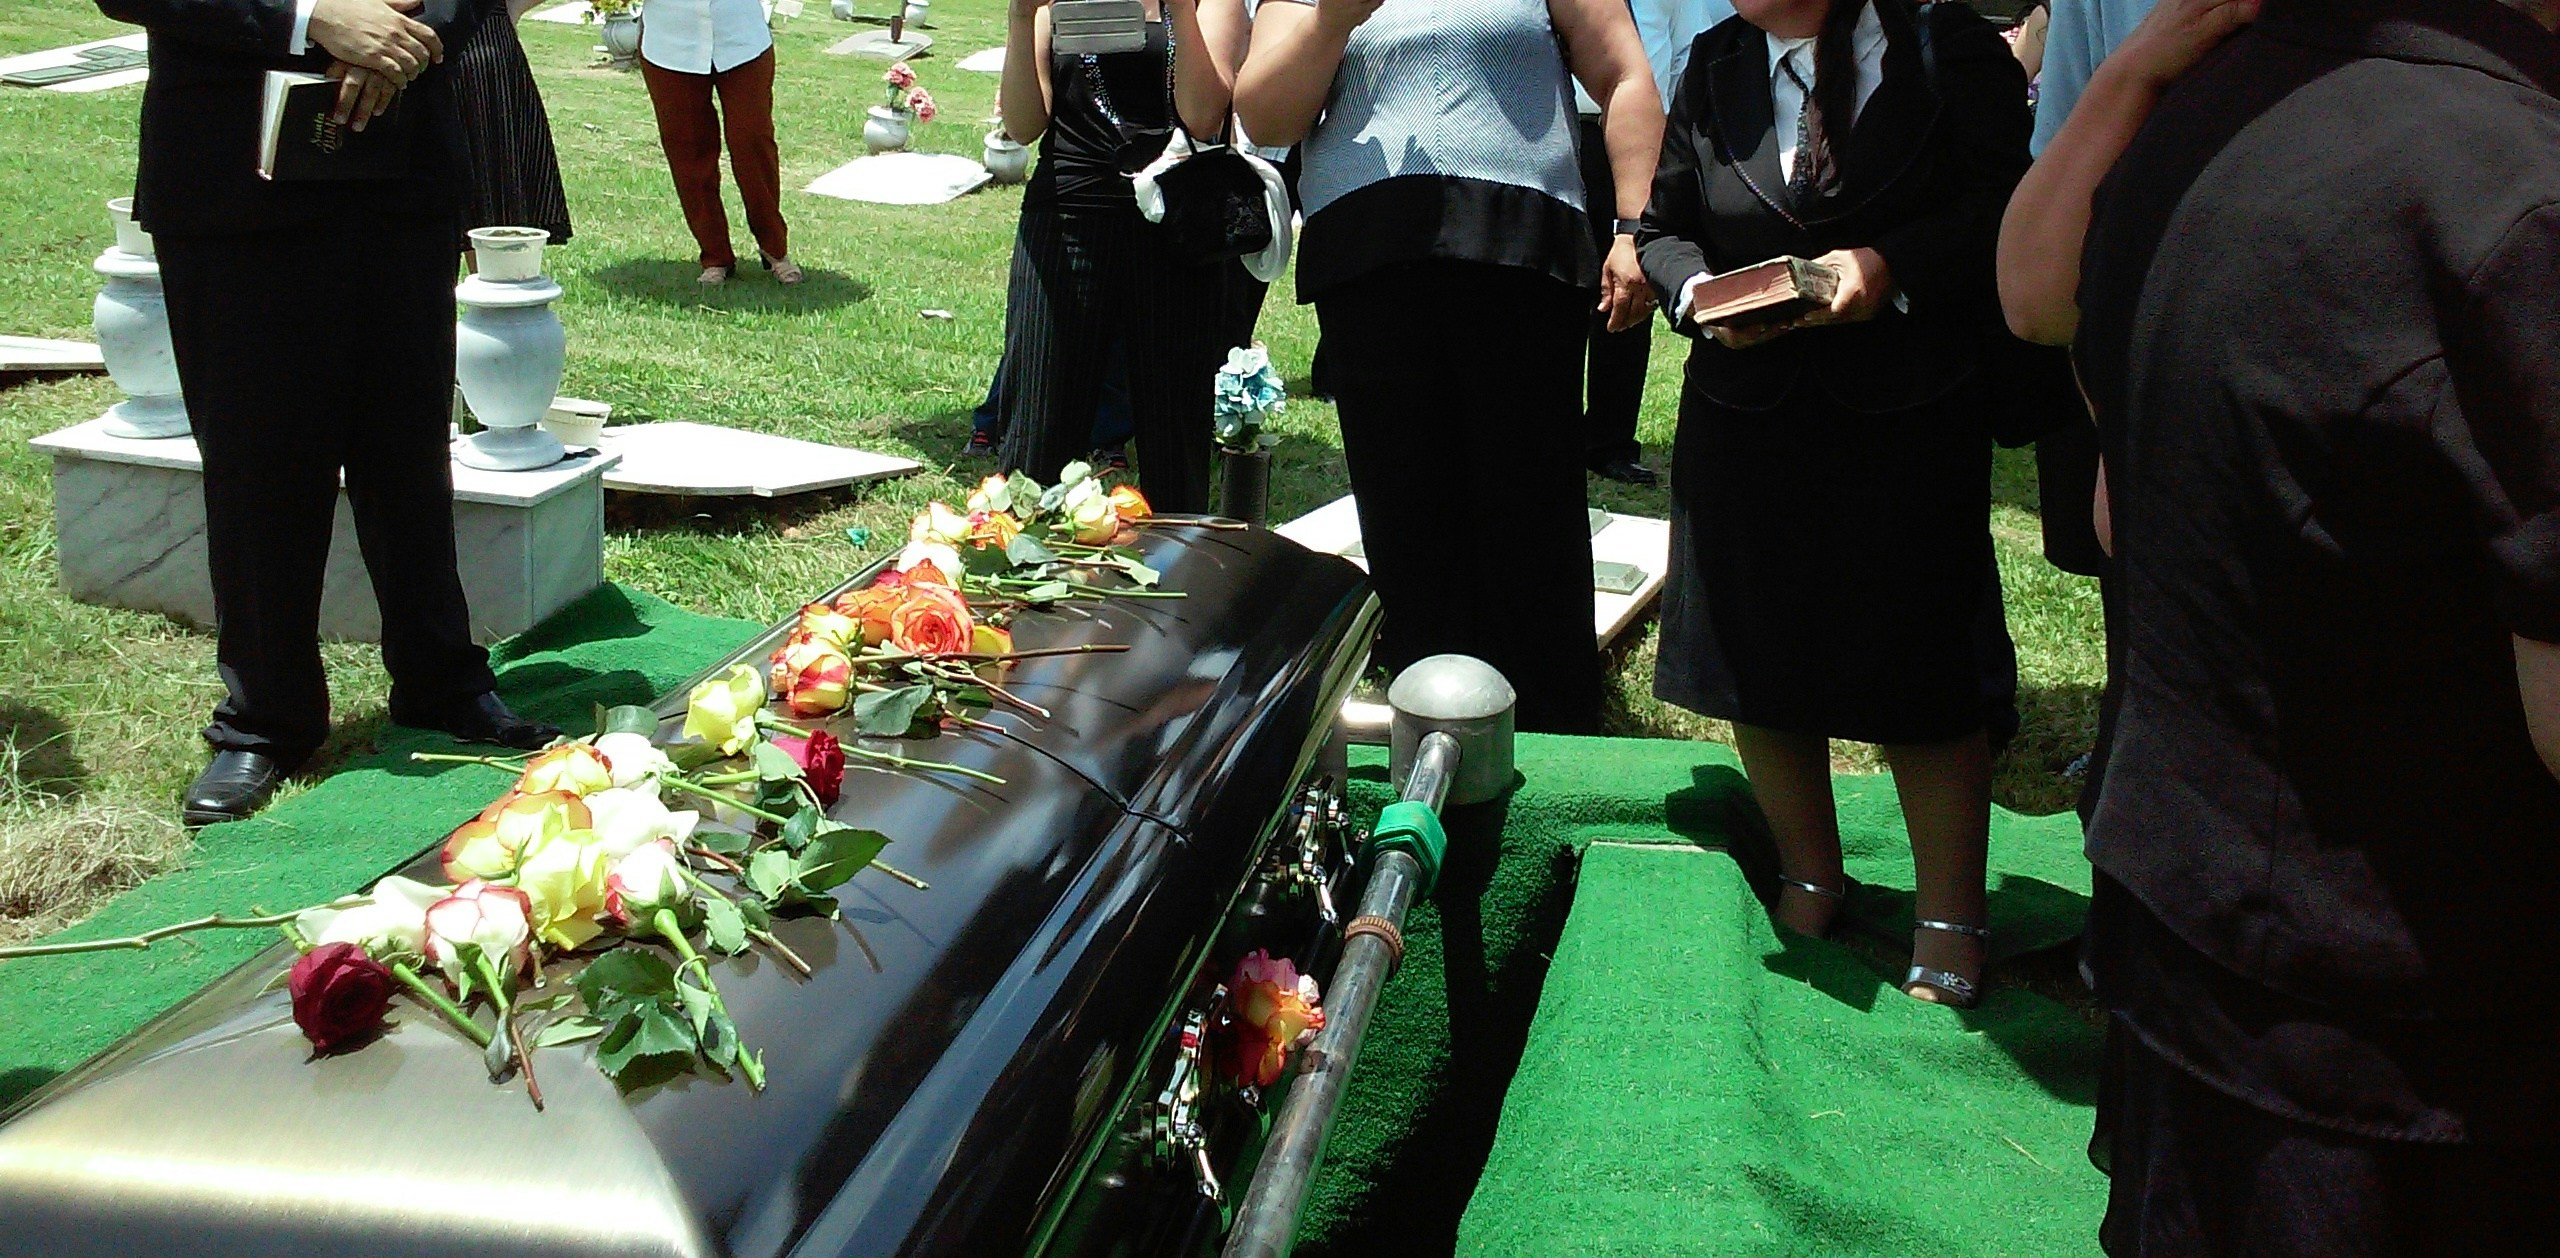 A casket at a funeral | Source: Unsplash